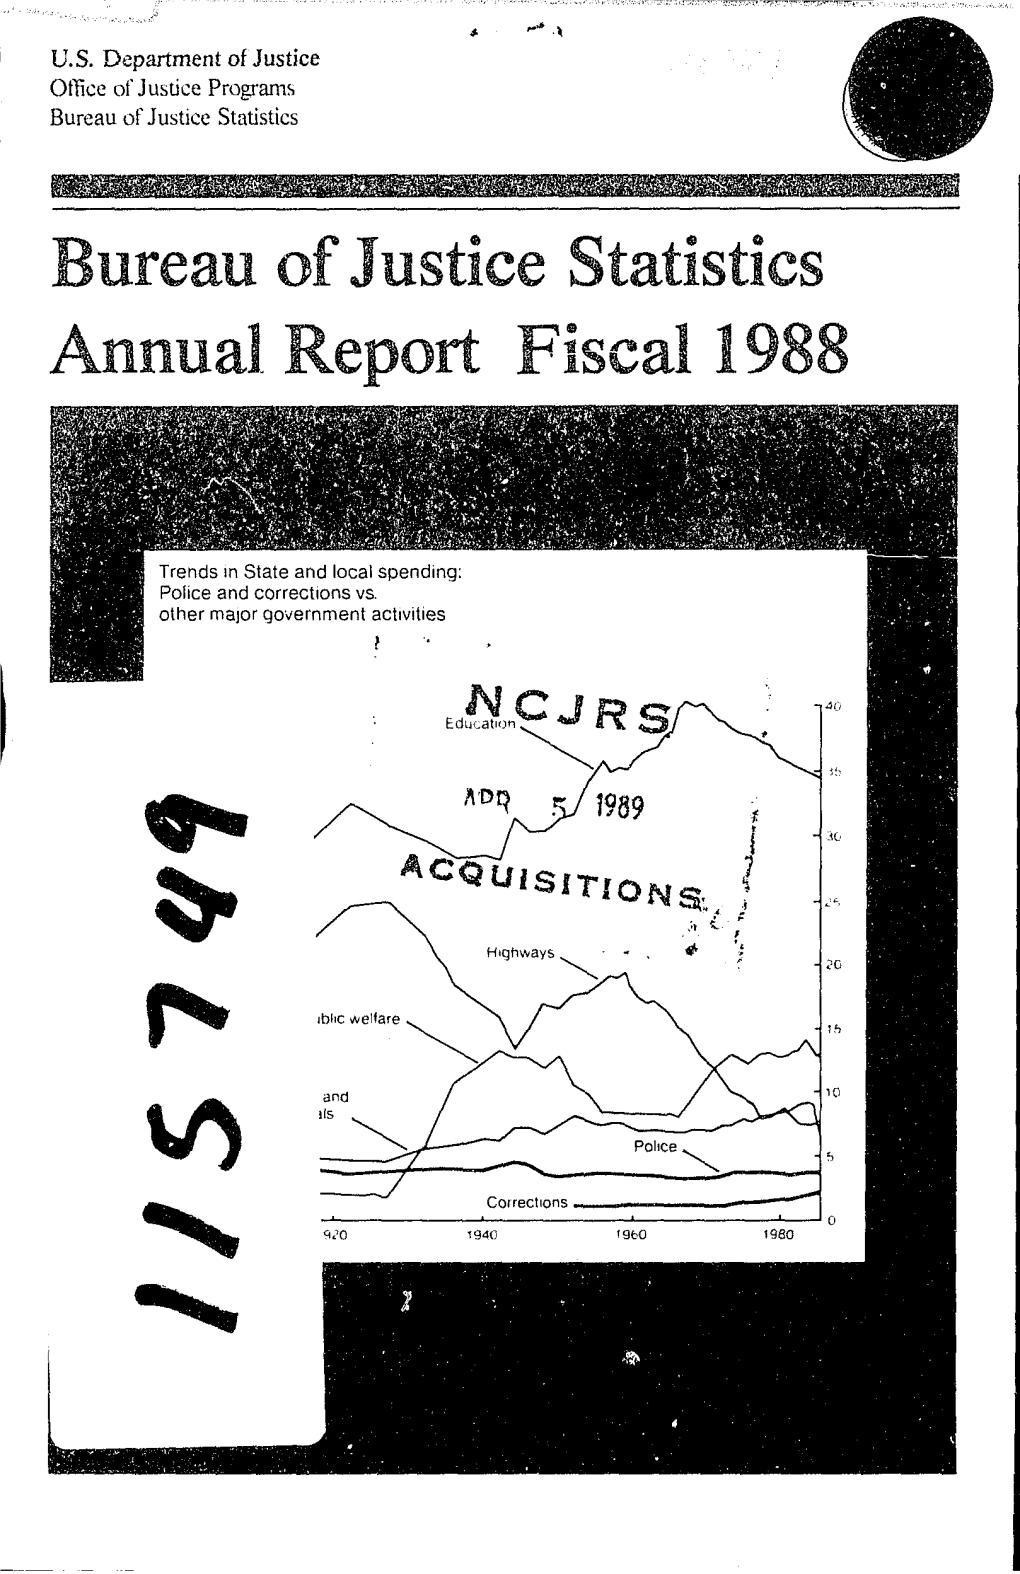 Bureau of Justice Statistics Annual Report Fiscal 1988